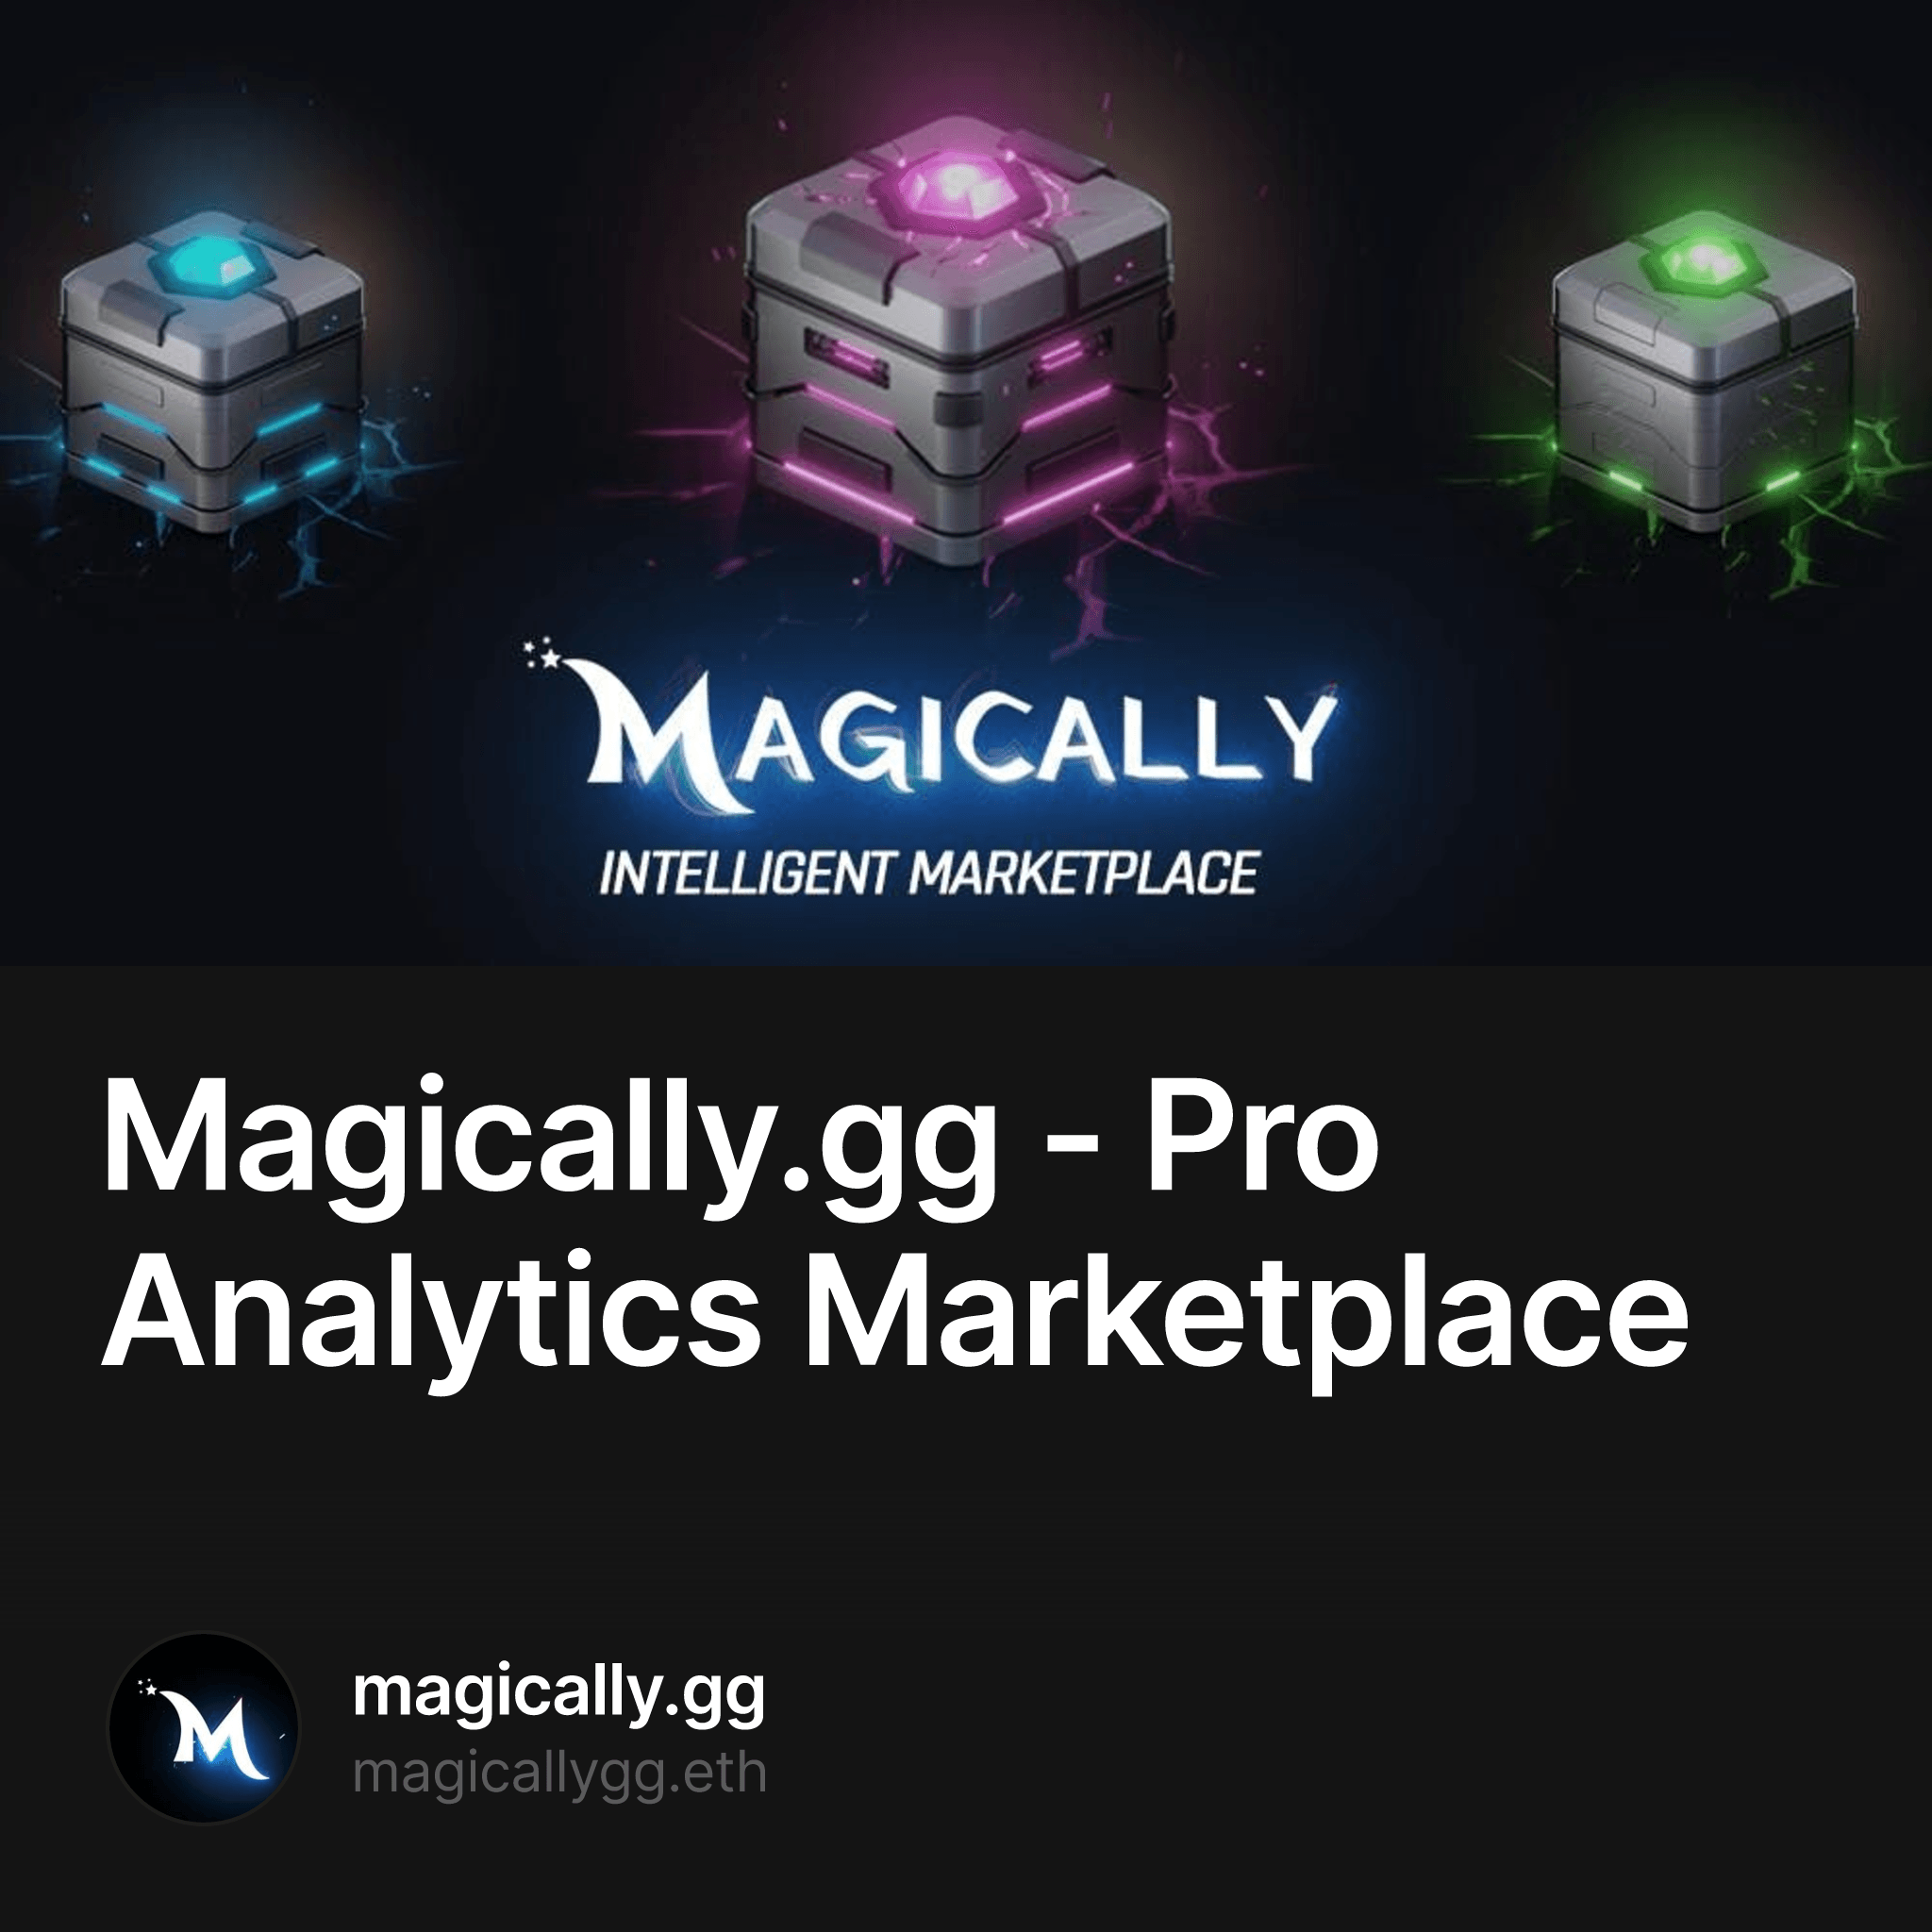 Magically.gg - Pro Analytics Marketplace 632/1000